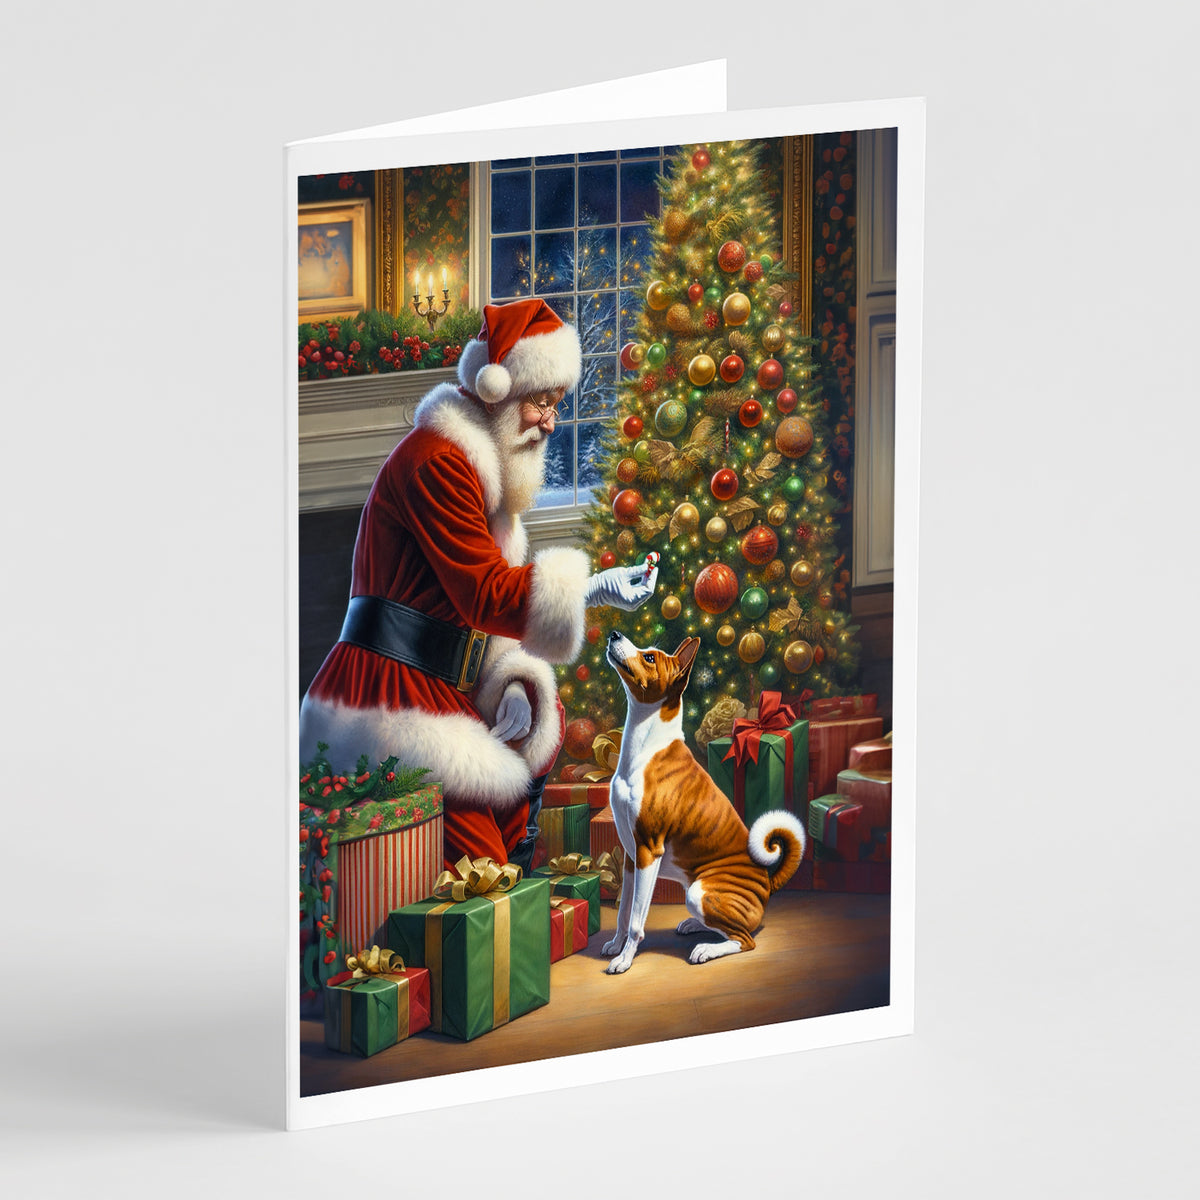 Buy this Basenji and Santa Claus Greeting Cards Pack of 8